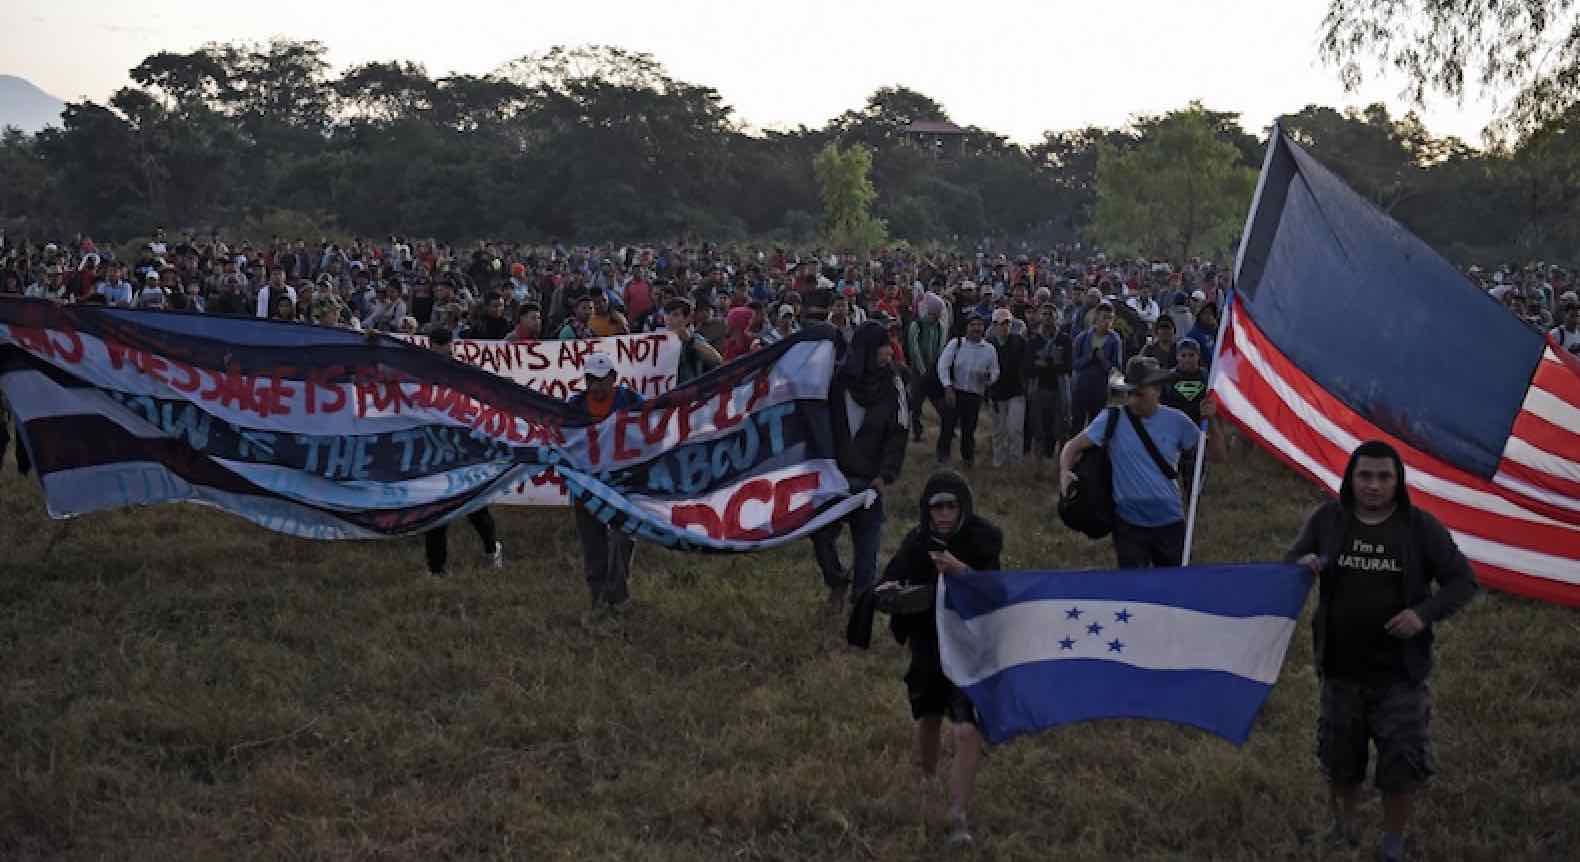 Cientos de migrantes centroamericanos ingresan a México desde Guatemala